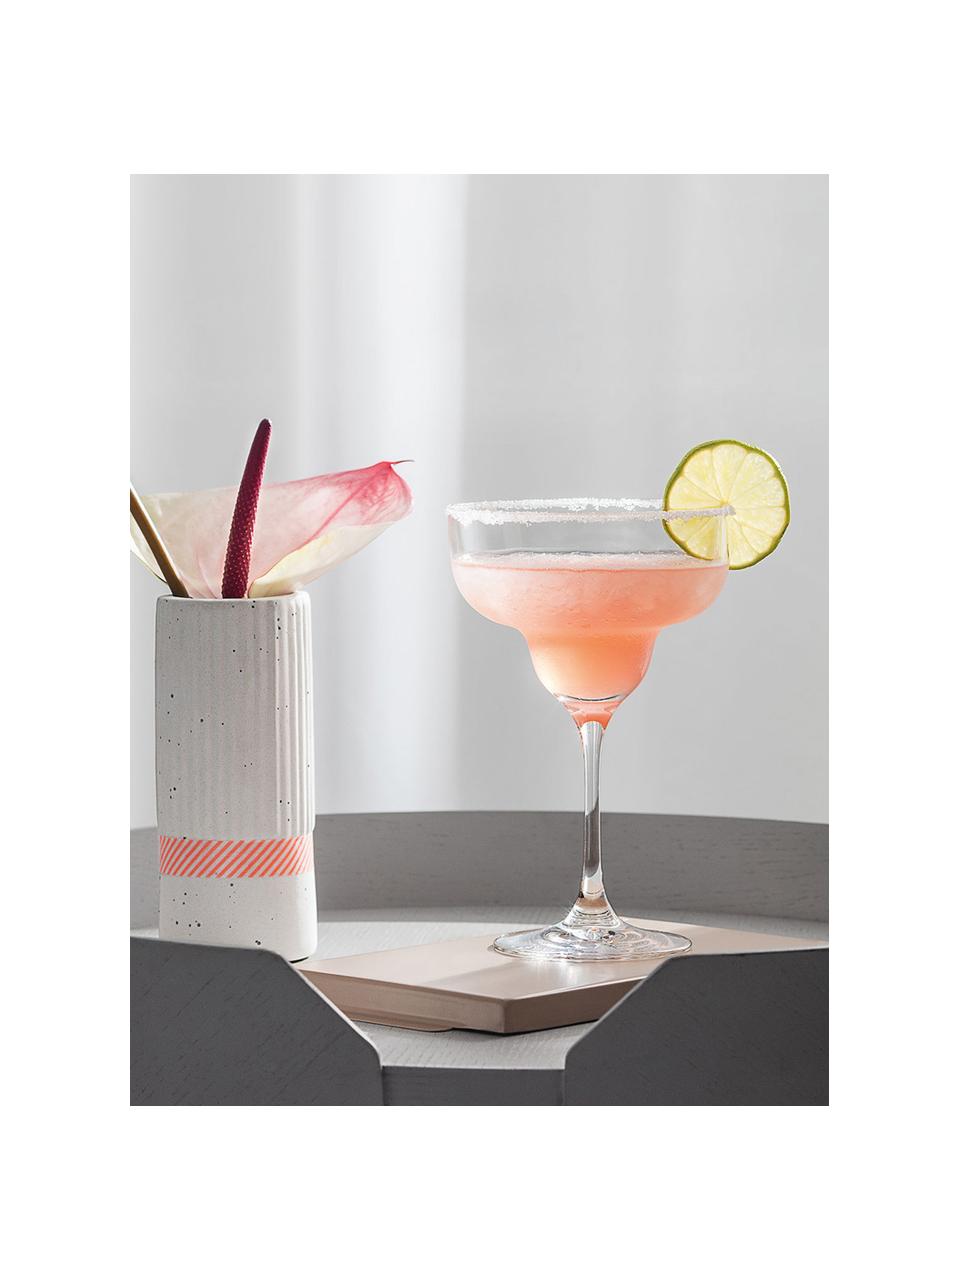 Margarita Cocktailgläser Purismo, 2 Stück, Glas, Transparent, Ø 11 x H 17 cm, 340 ml